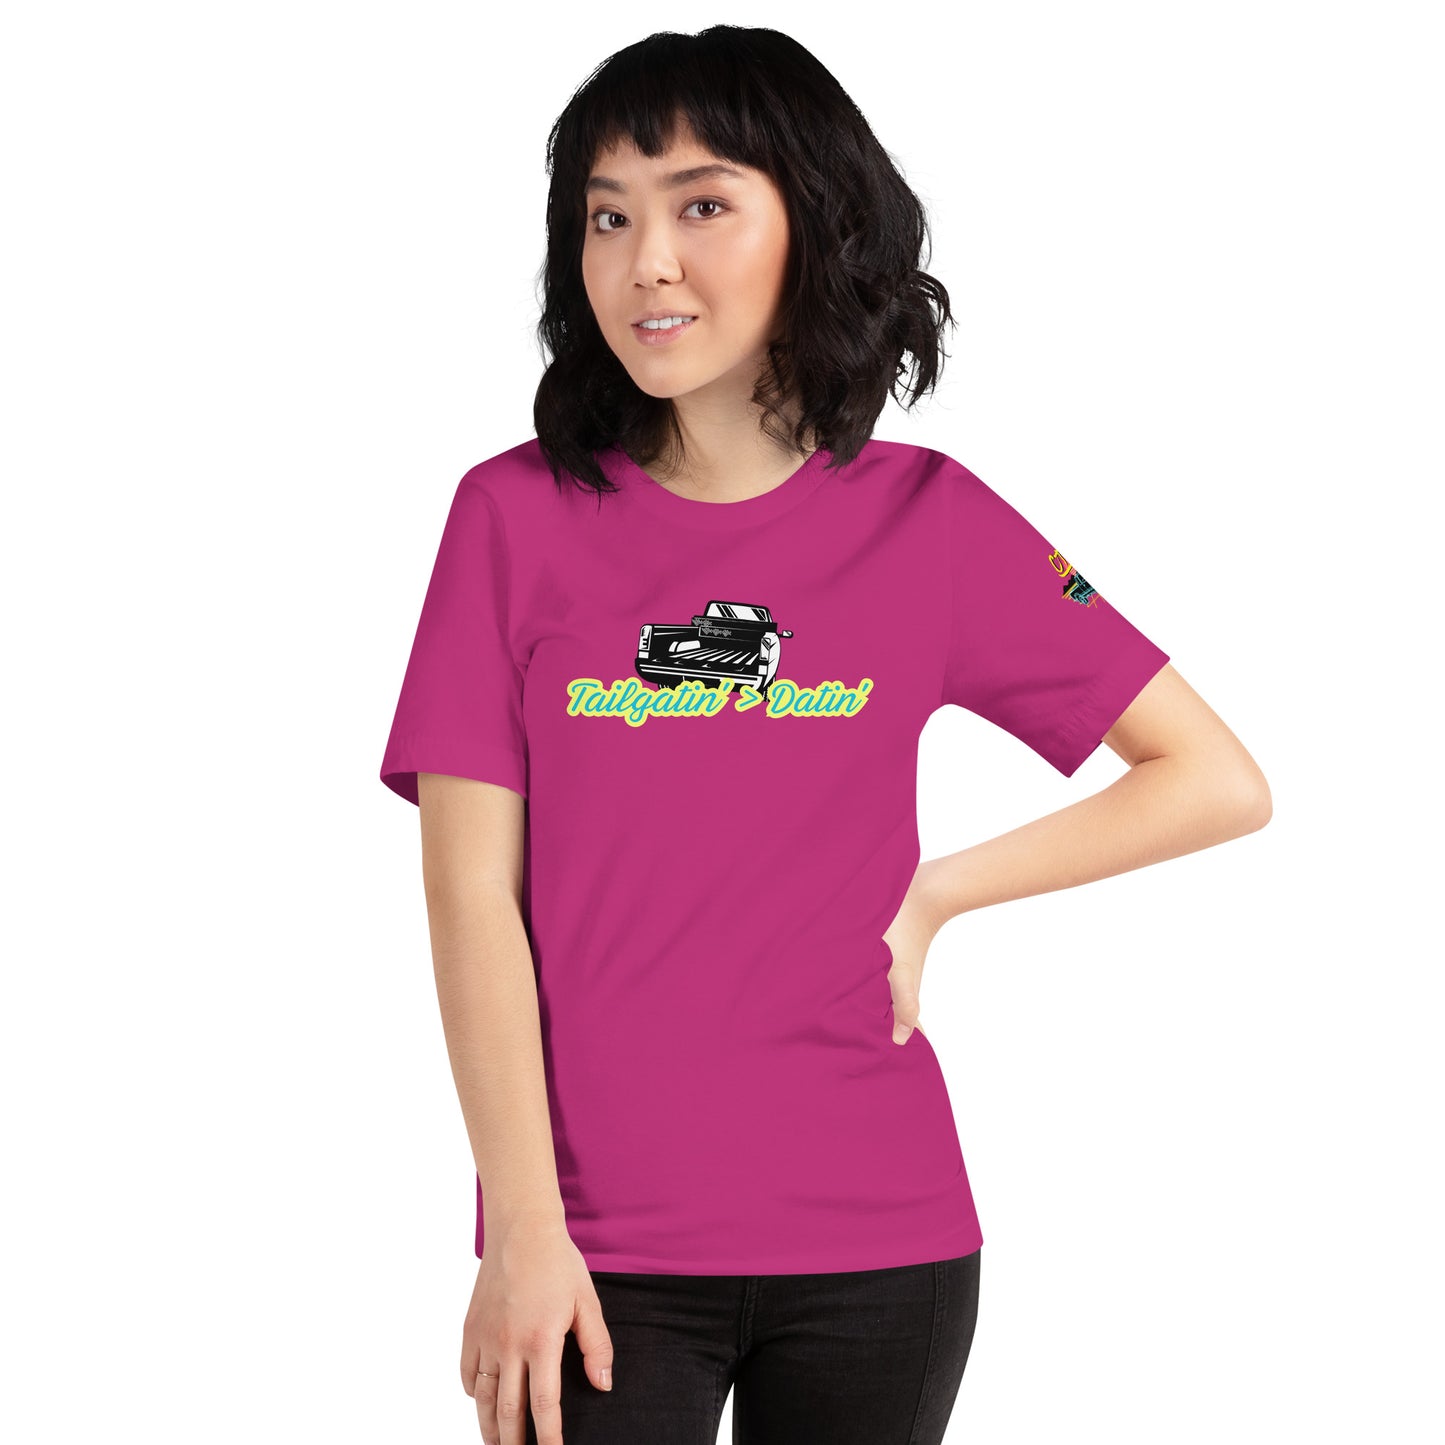 Tailgatin' > Datin' Unisex Soft T-shirt